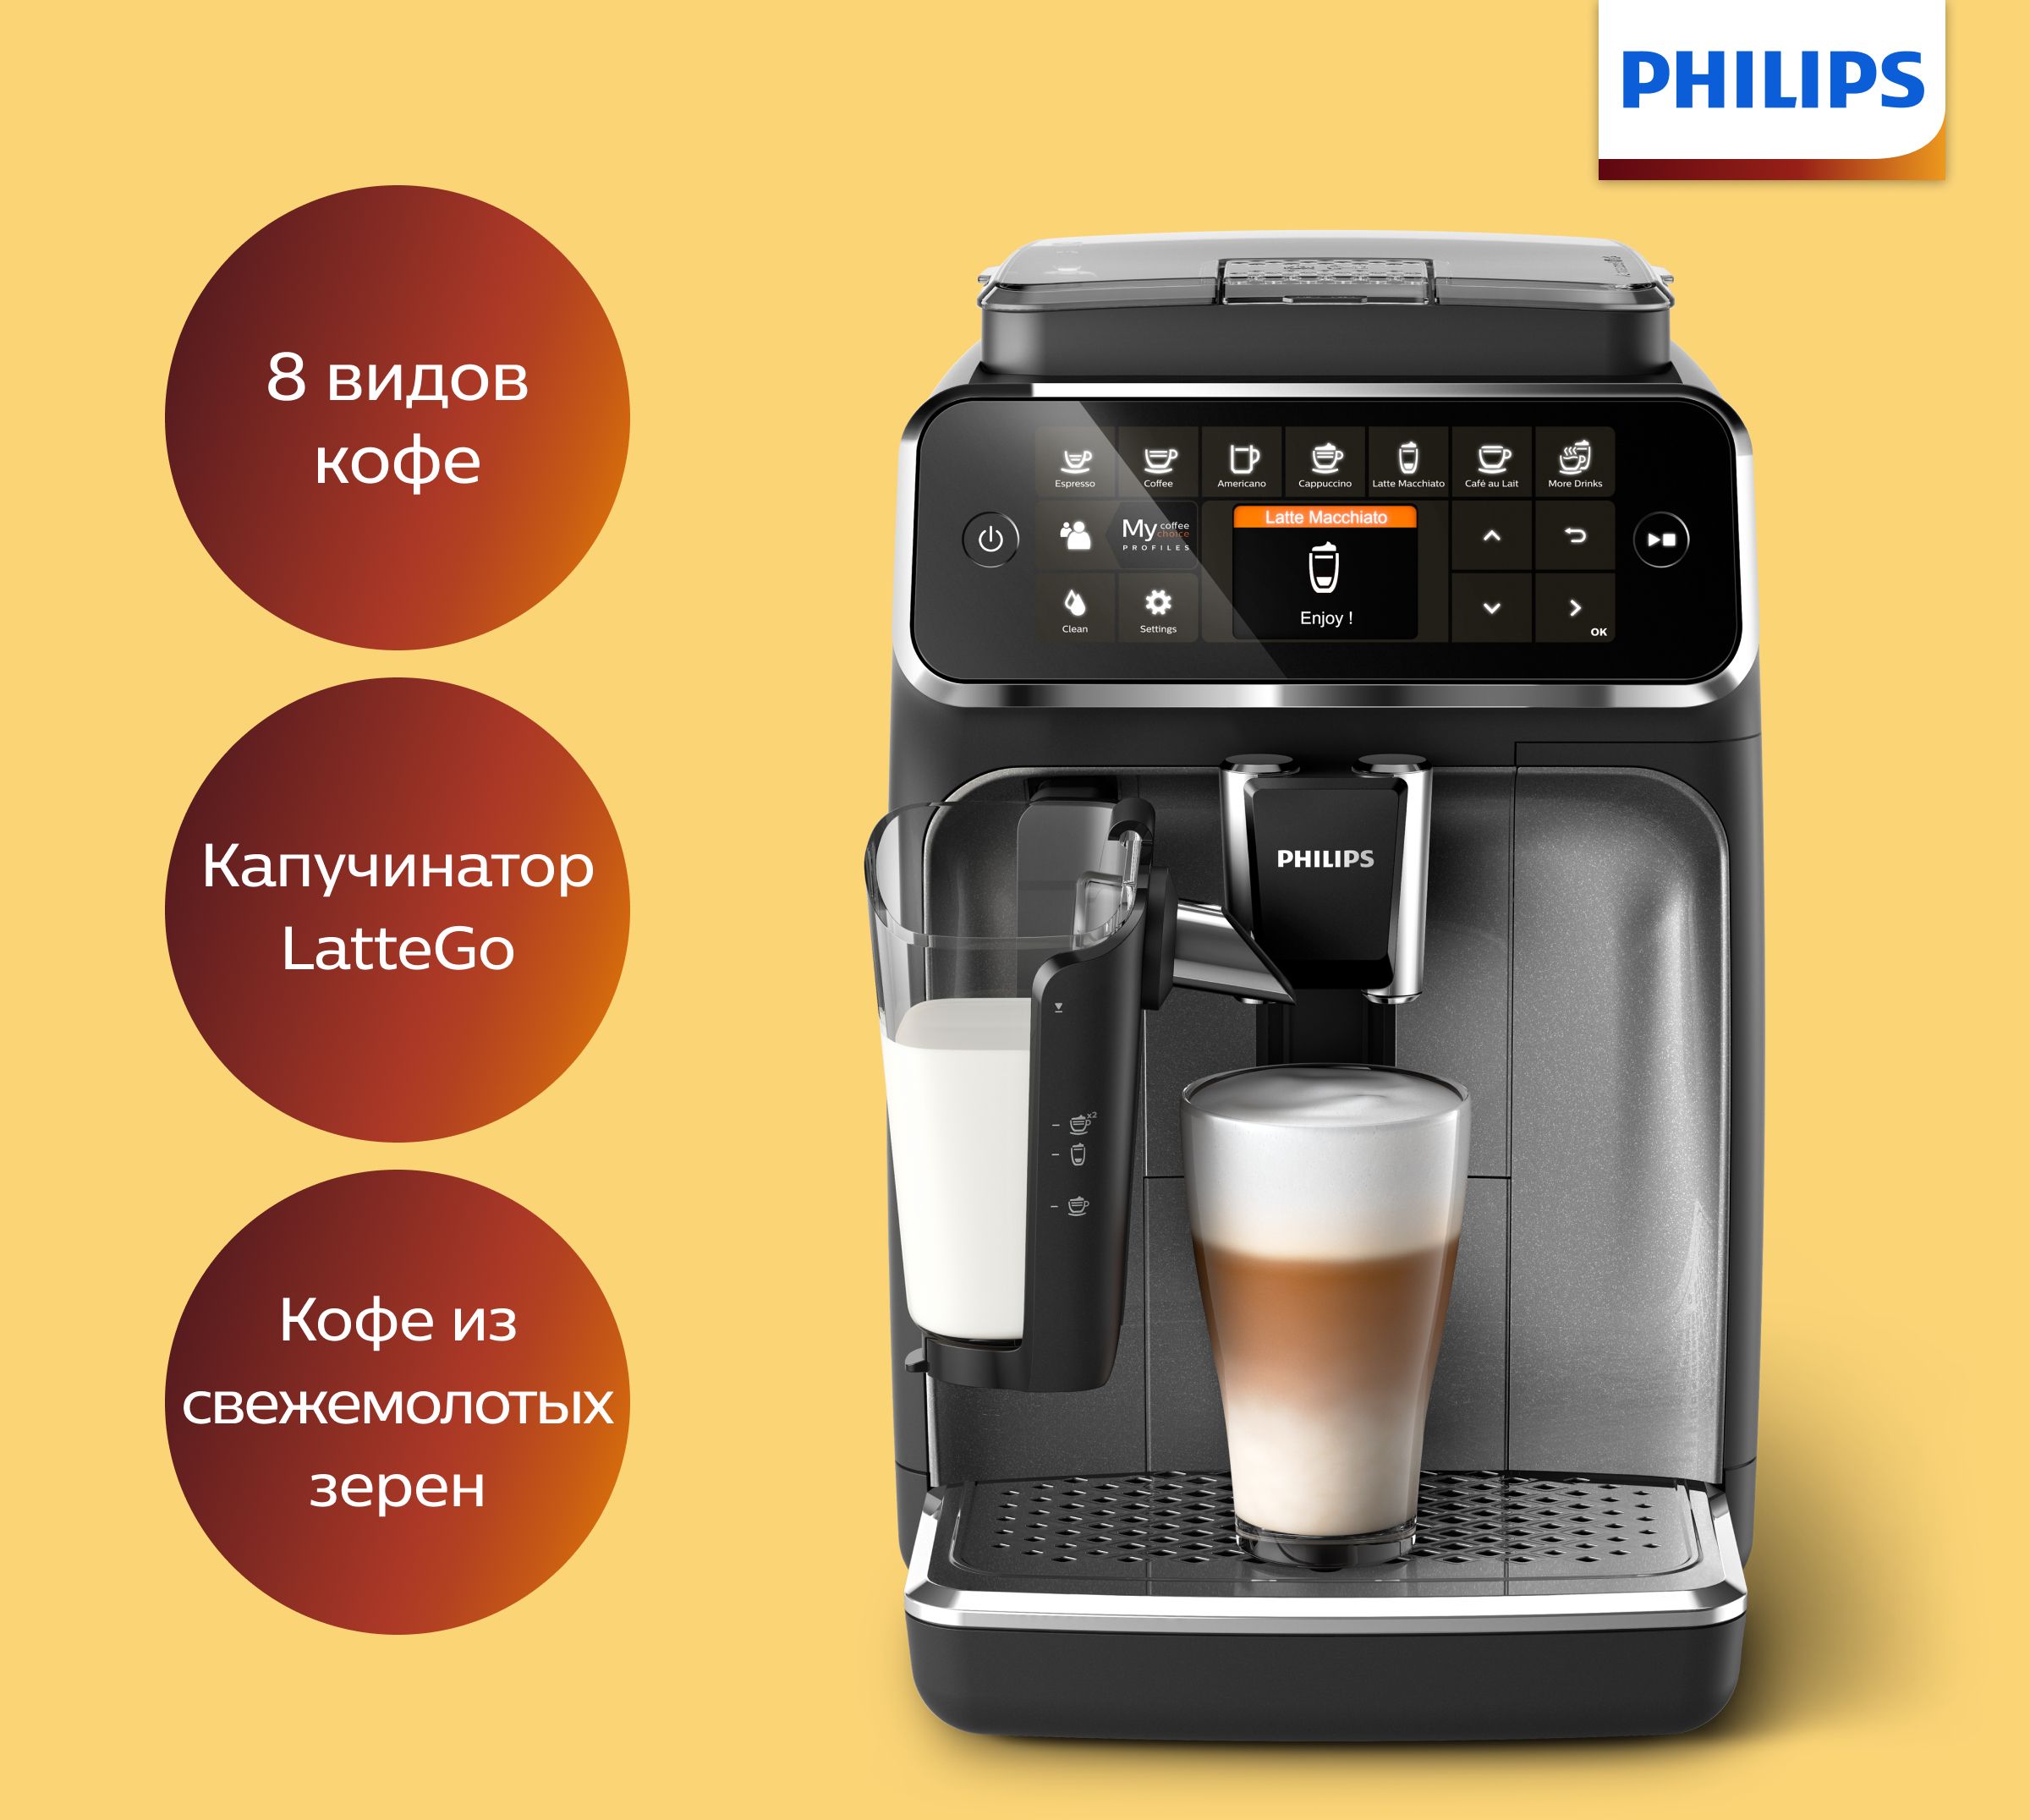 Philips 4300 series lattego ep4346